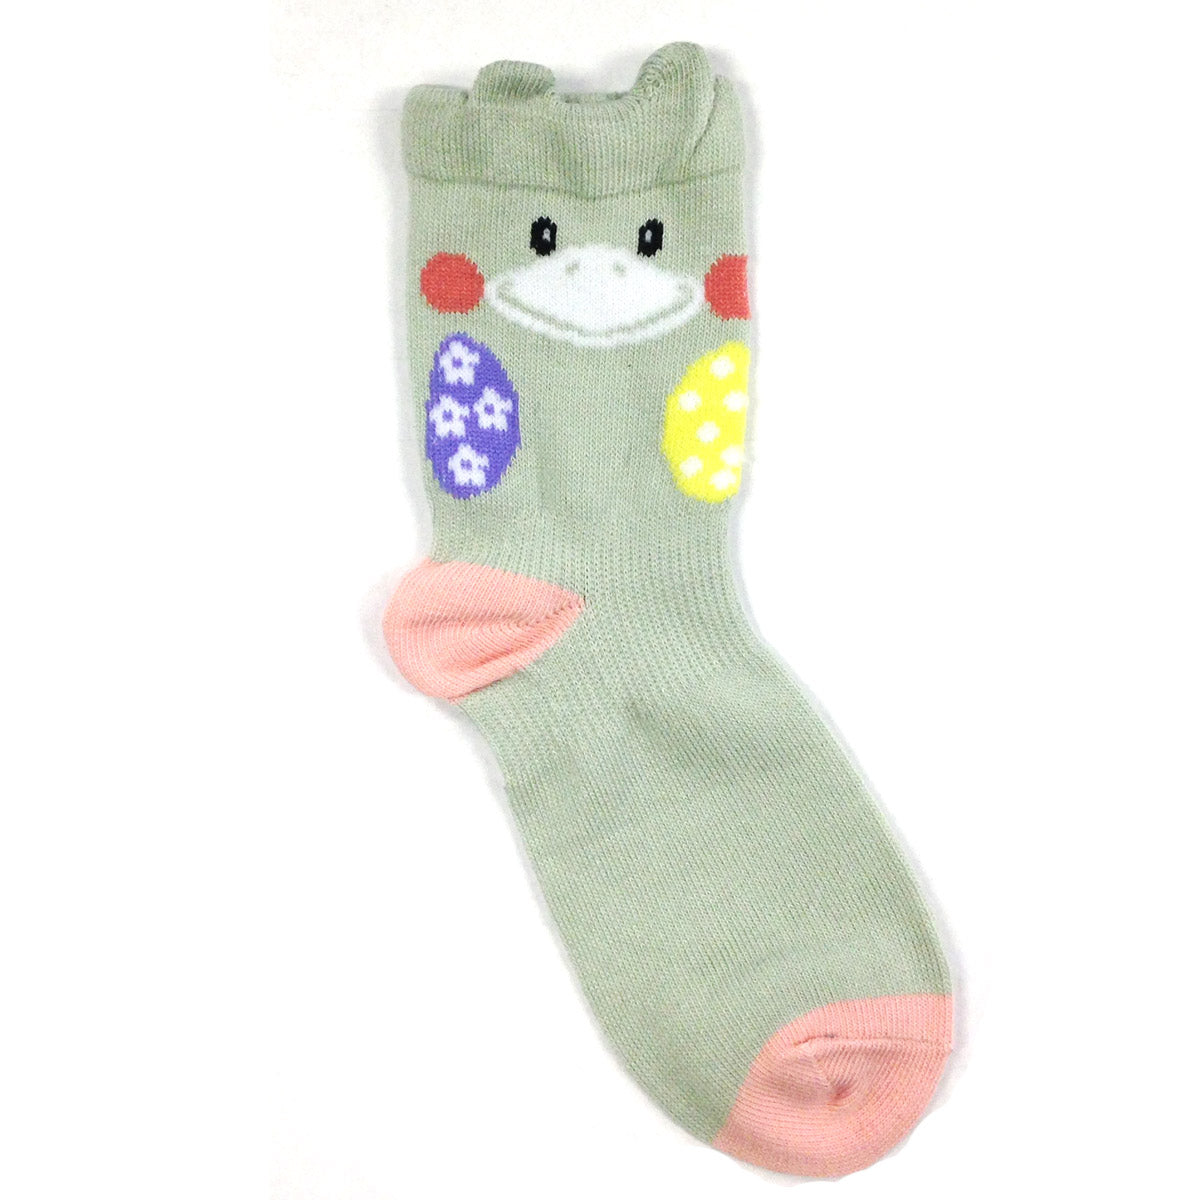 Wrapables Animal Non-Skid Toddler Socks Set of 3